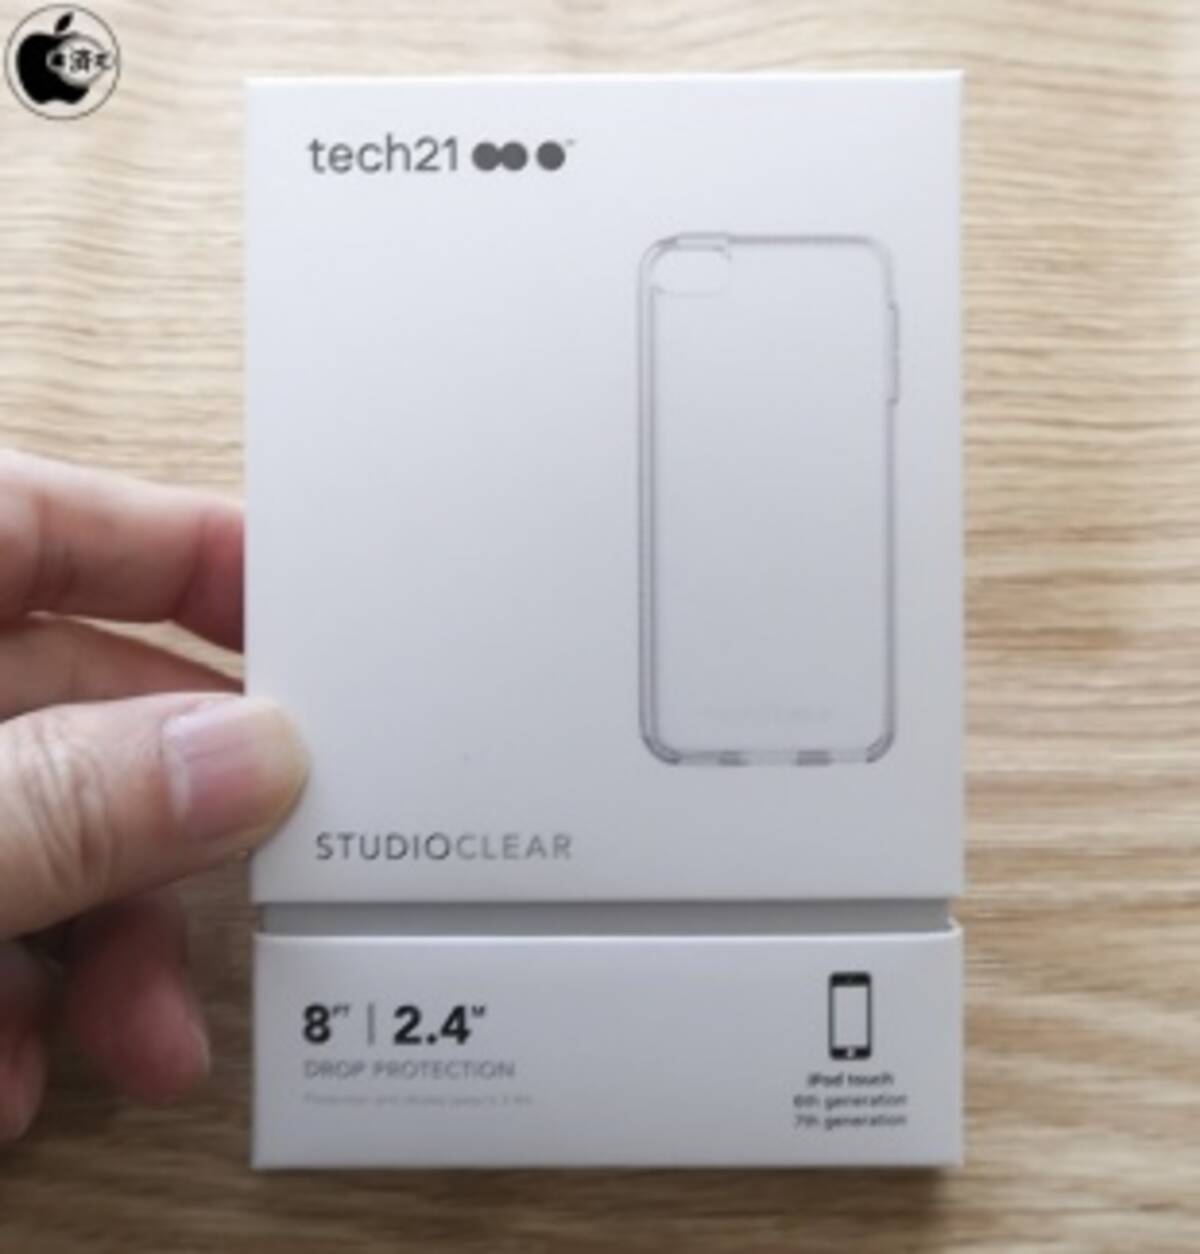 Apple 英tech21の耐衝撃 抗菌ipod Touch 7th Generation 用ケース Tech21 Studio Case For Ipod Touch 第7 第6世代 を販売開始 年3月28日 エキサイトニュース